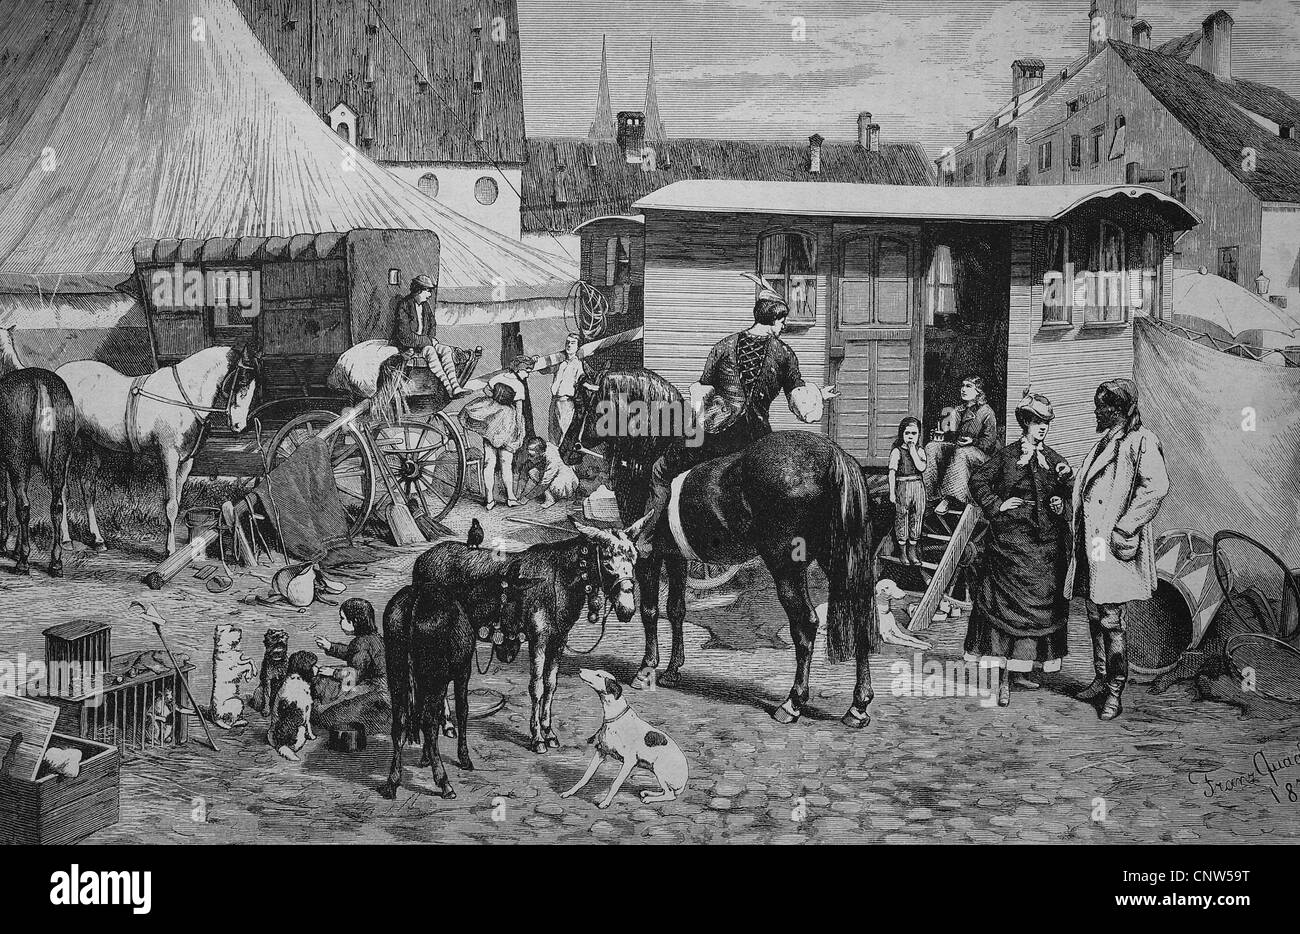 Caravan park from a circus, historical engraving, 1880 Stock Photo